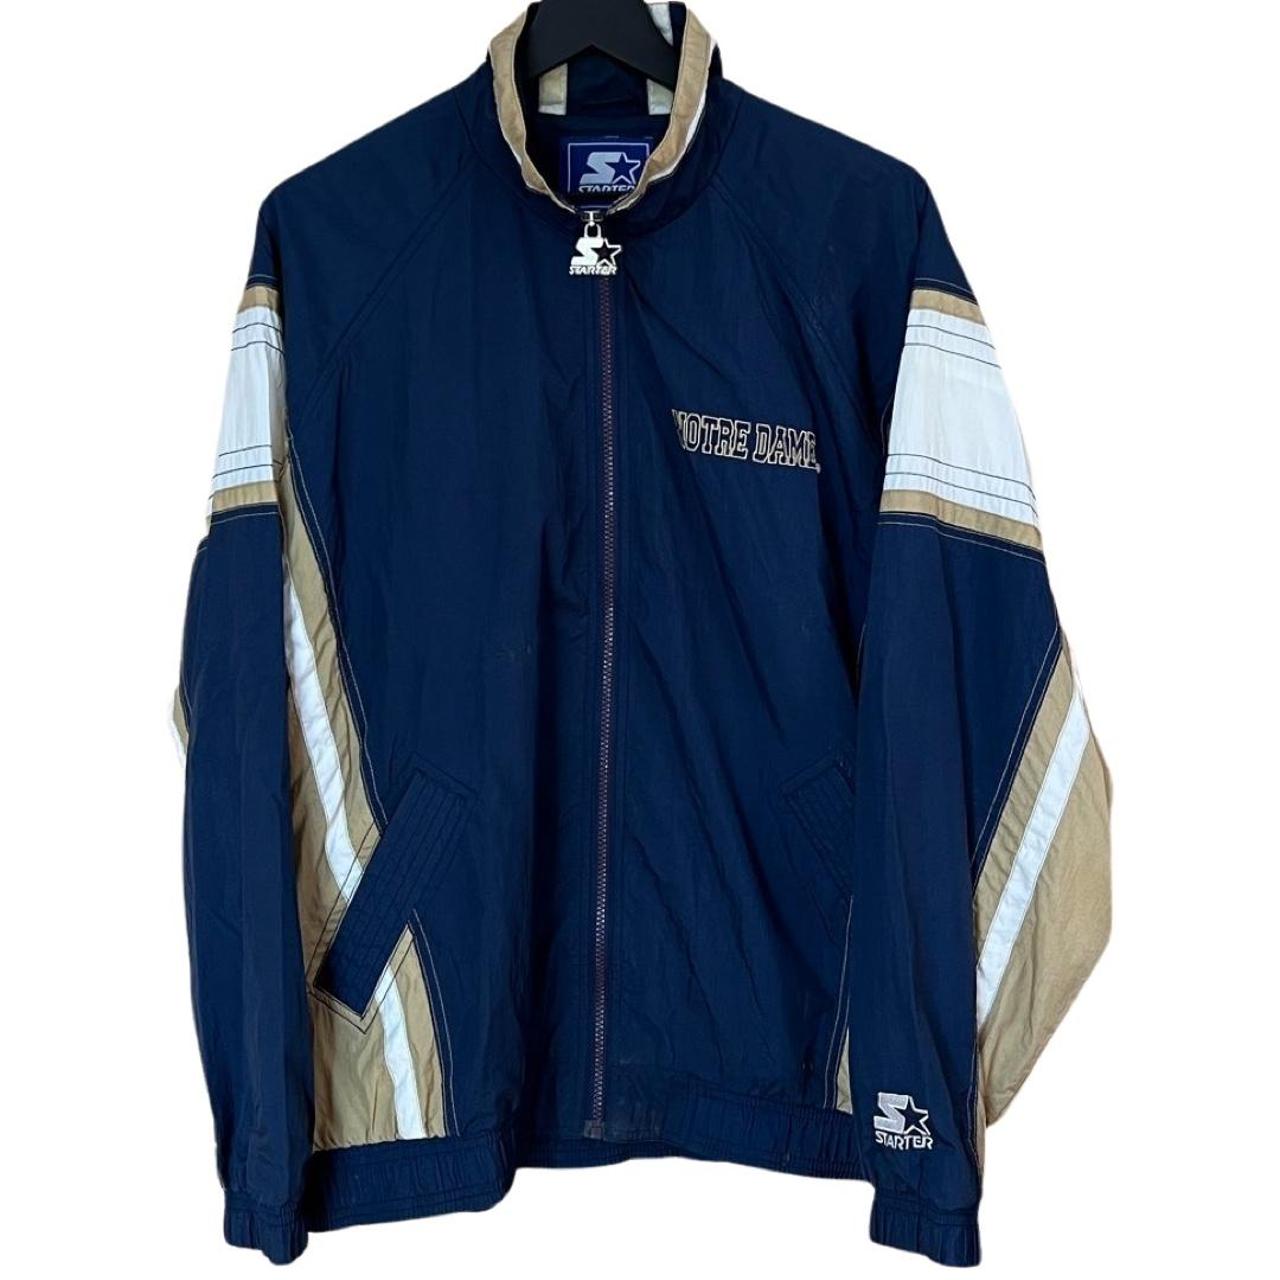 Vintage Notre Dame windbreaker jacket Brand-... - Depop